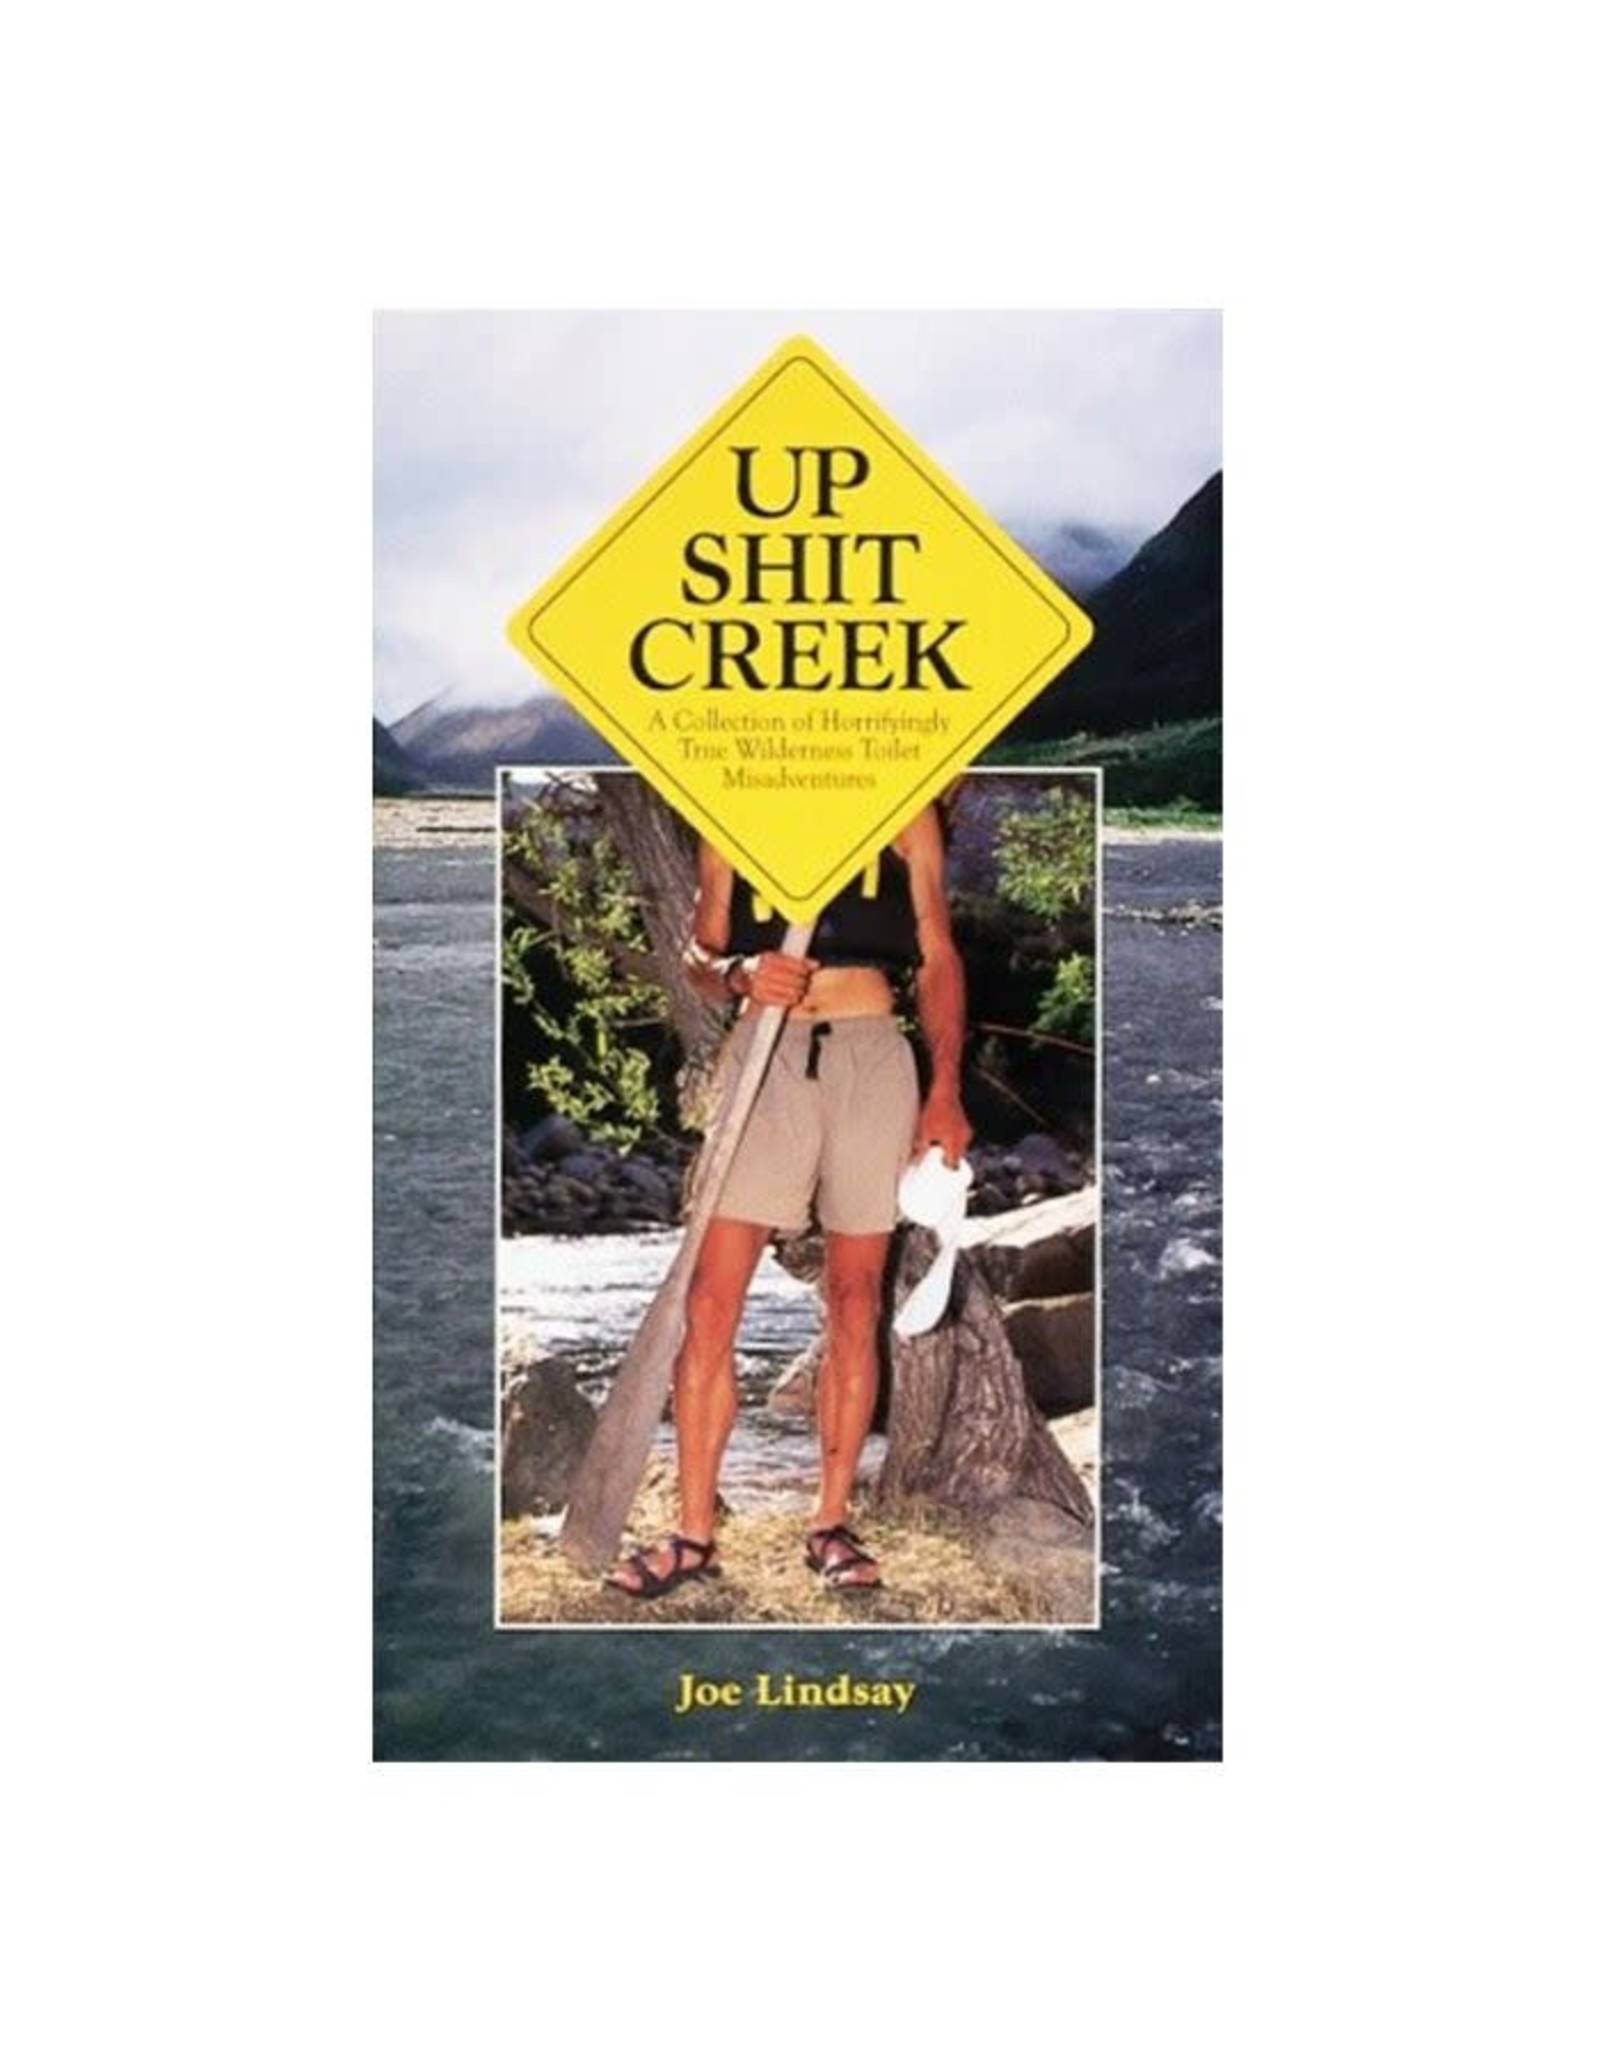 Up Shit Creek by Joe Lindsay